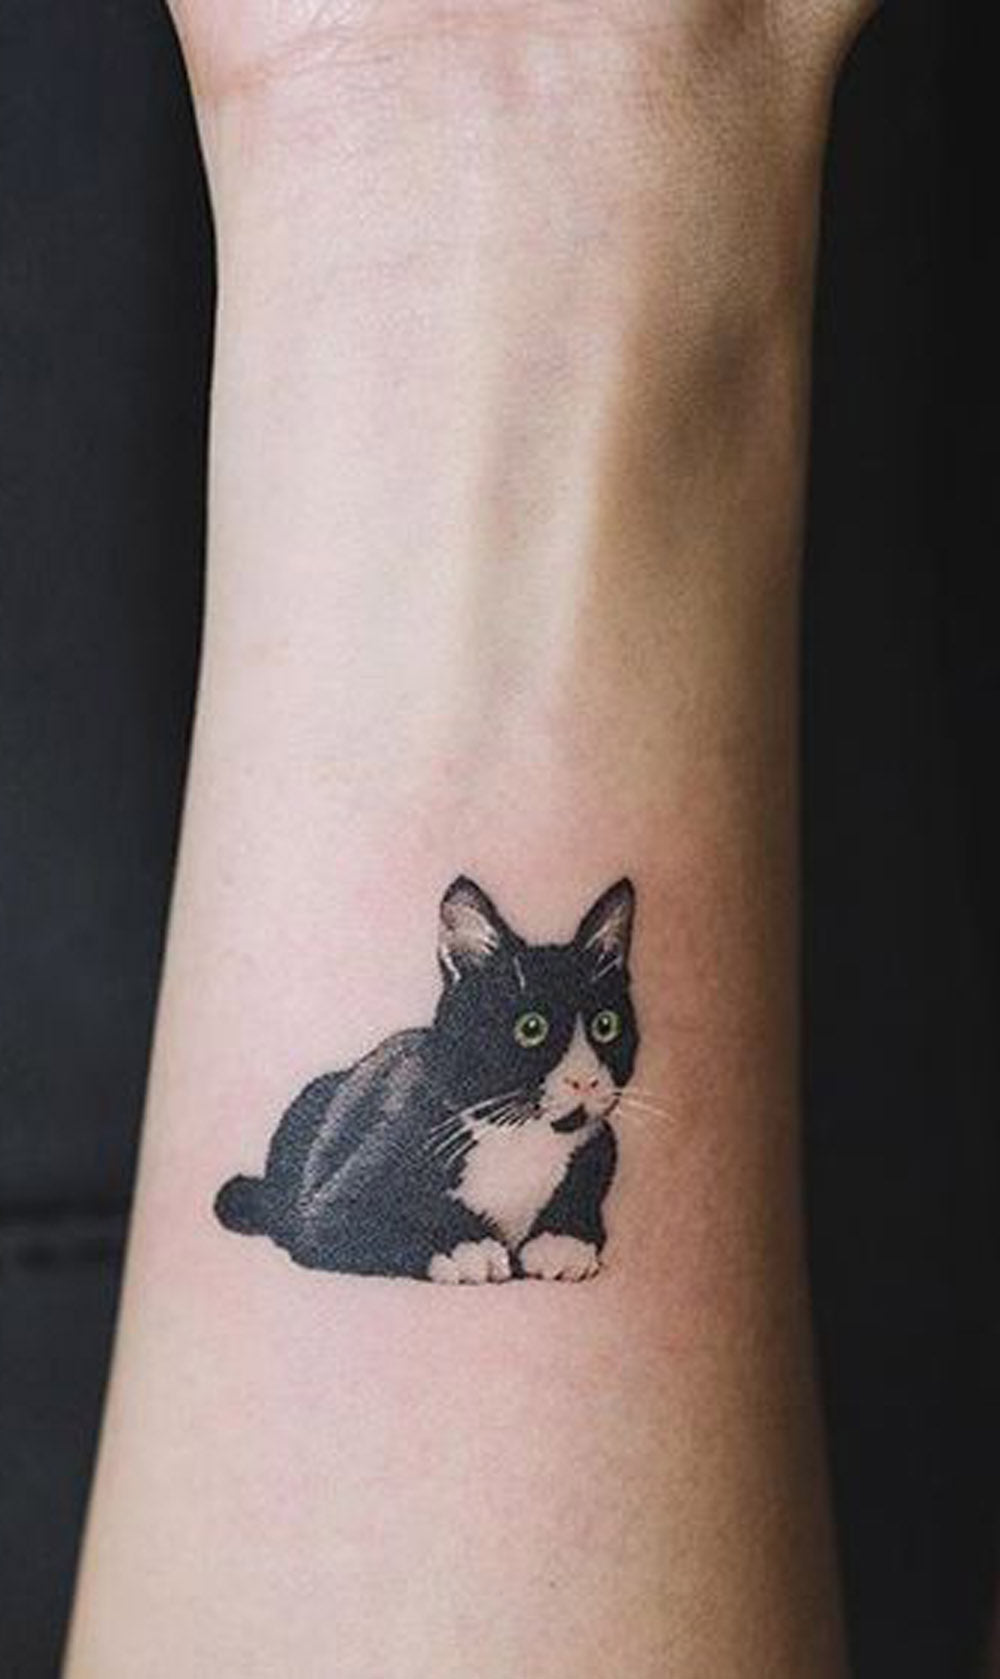 Black and White Cat Wrist Tattoo Ideas for Women -   Ideas de tatuaje de muñeca de gato blanco y negro para mujeres - www.MyBodiArt.com